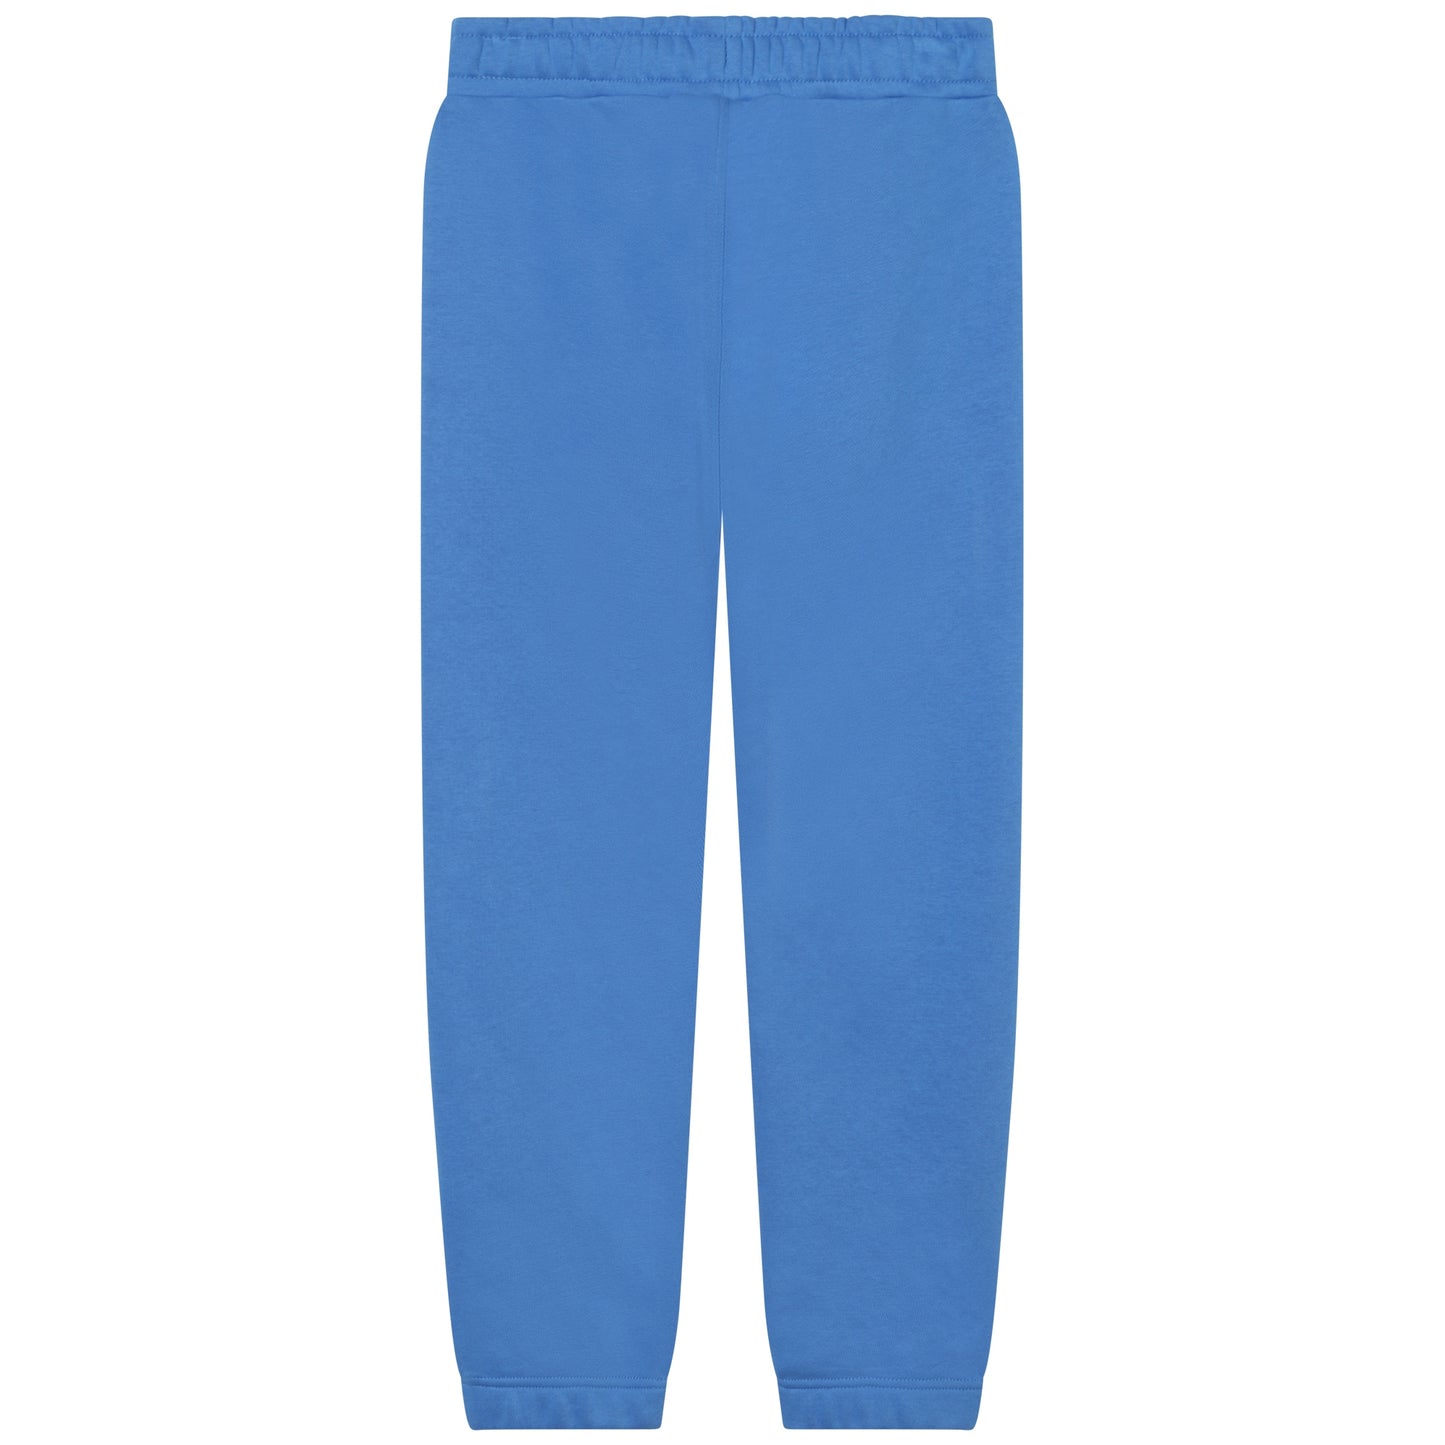 Hugo Boss Boys Blue Sweatpants_J24858-846